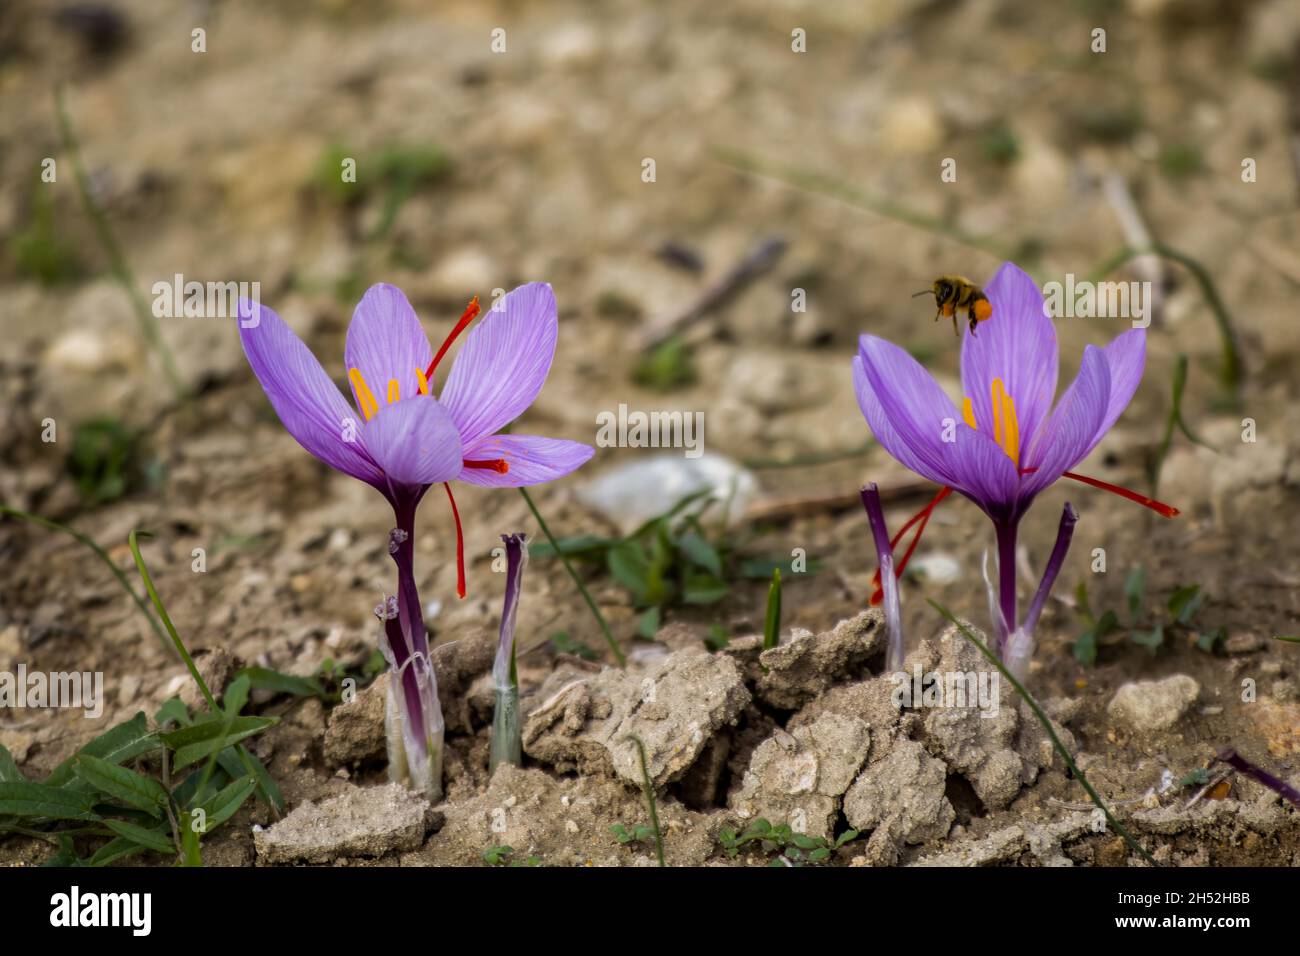 Saffron flowers on field. Crocus sativus plant on ground, closeup view. Harvest collection season in Kozani Greece Stock Photo